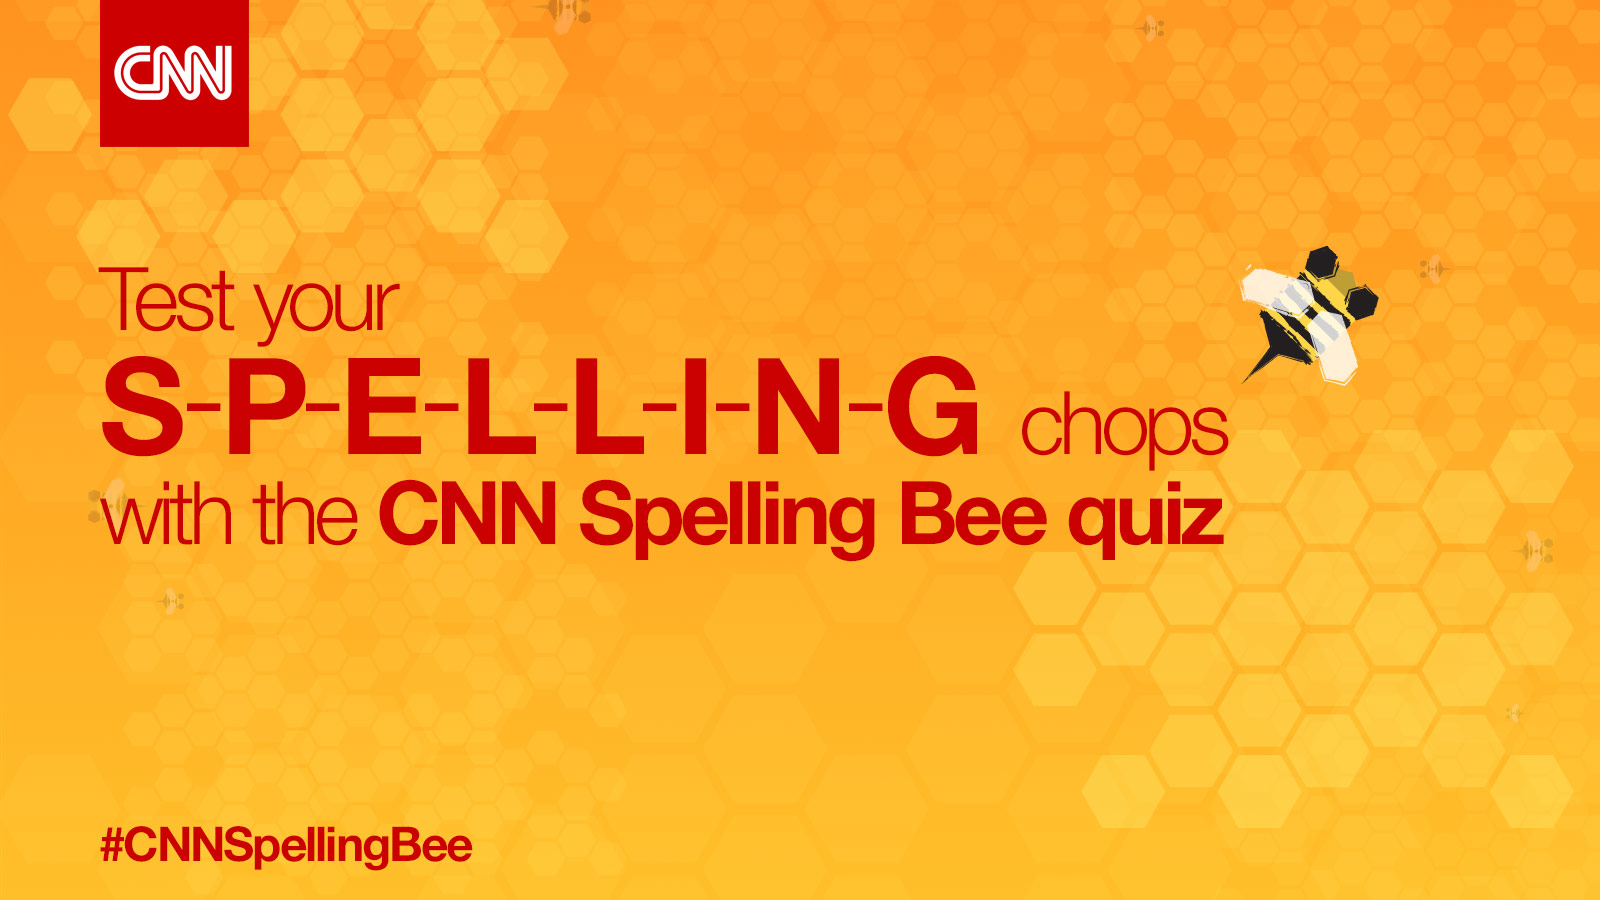 CNN Spelling Bee 2016